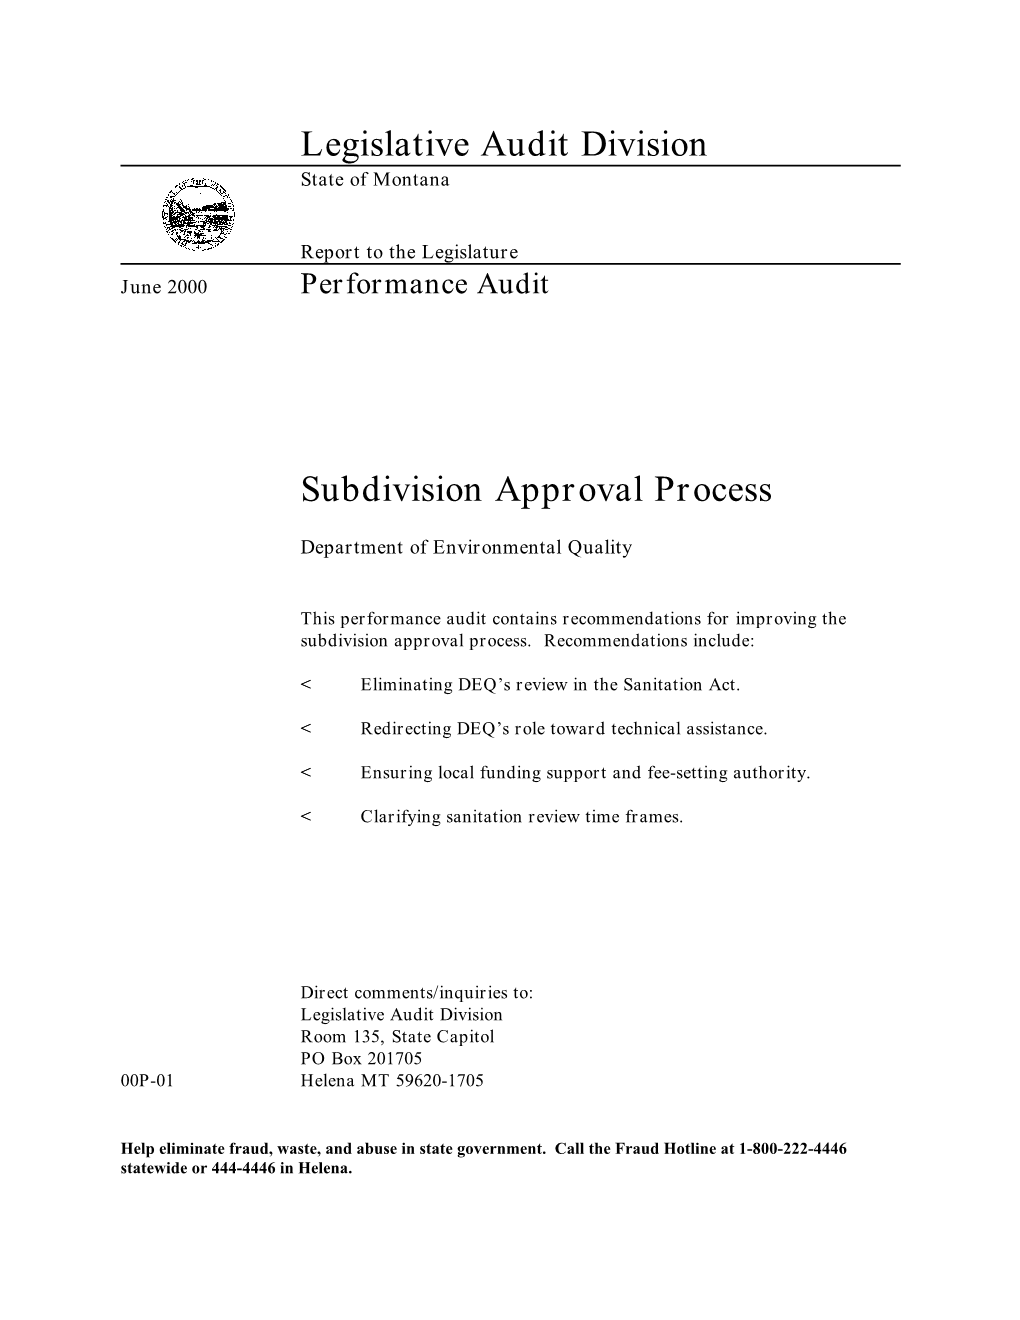 Legislative Audit Division Subdivision Approval Process